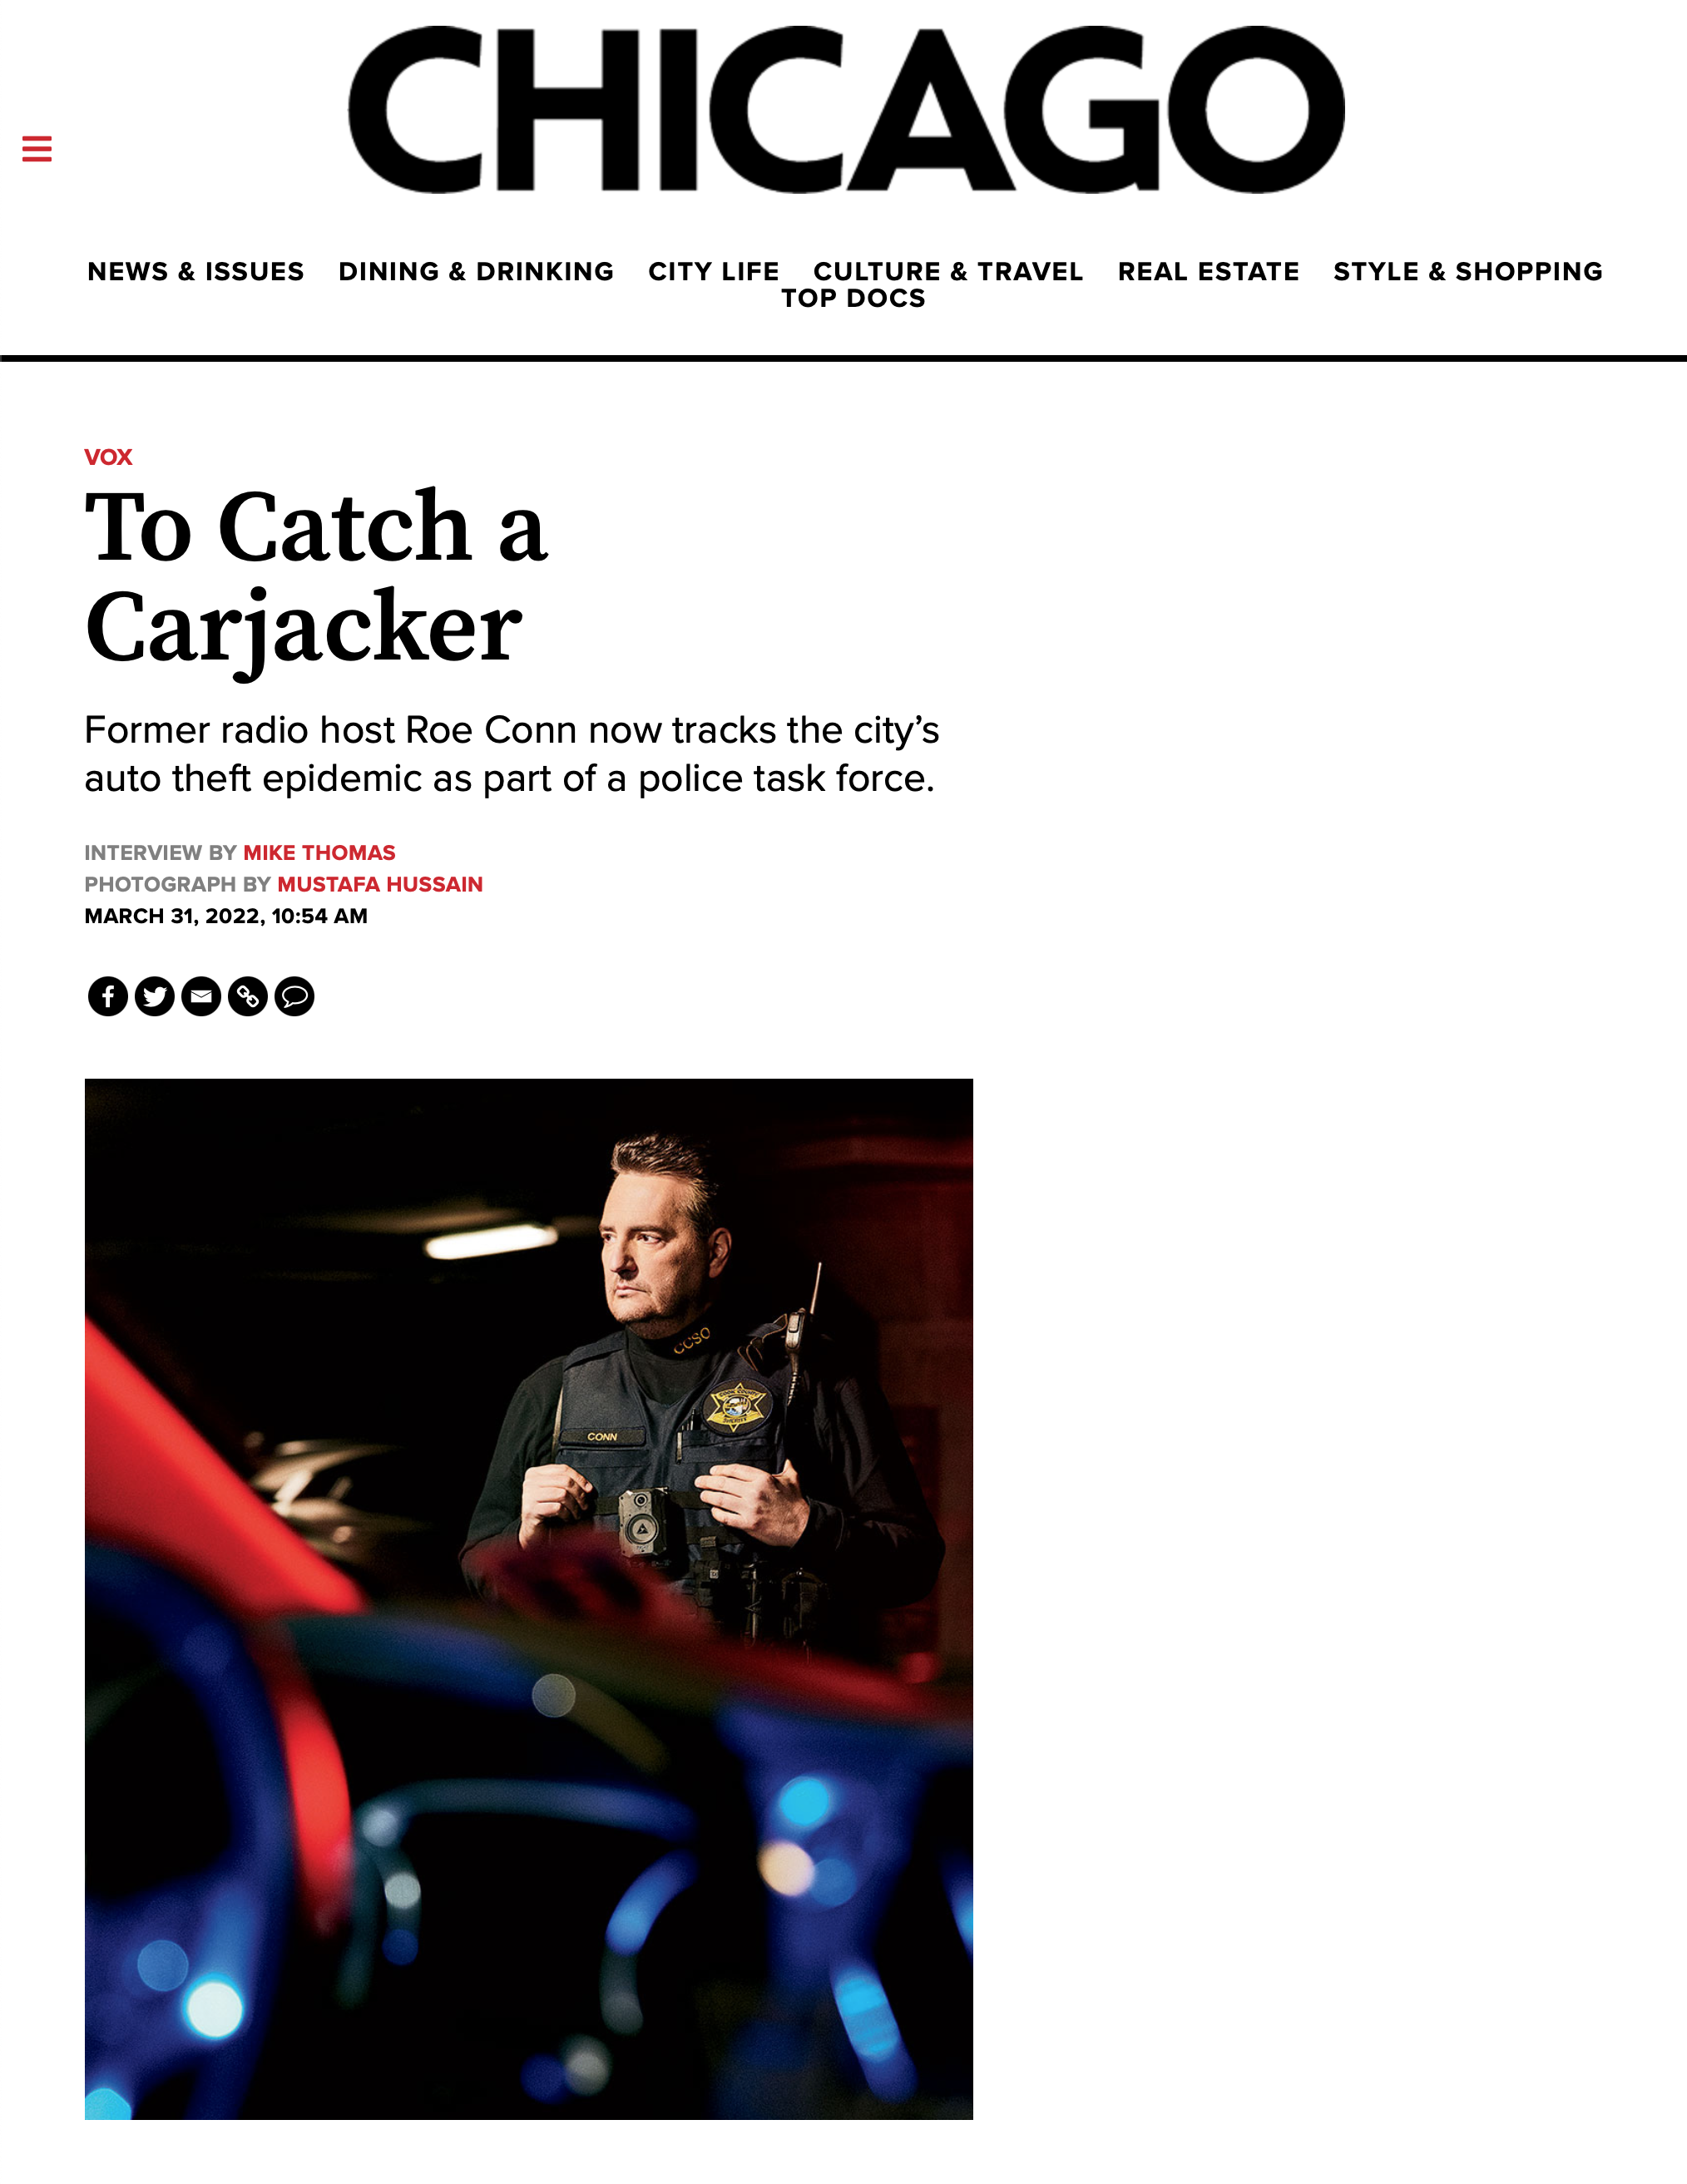   https://www.chicagomag.com/chicago-magazine/april-2022/to-catch-a-carjacker/  